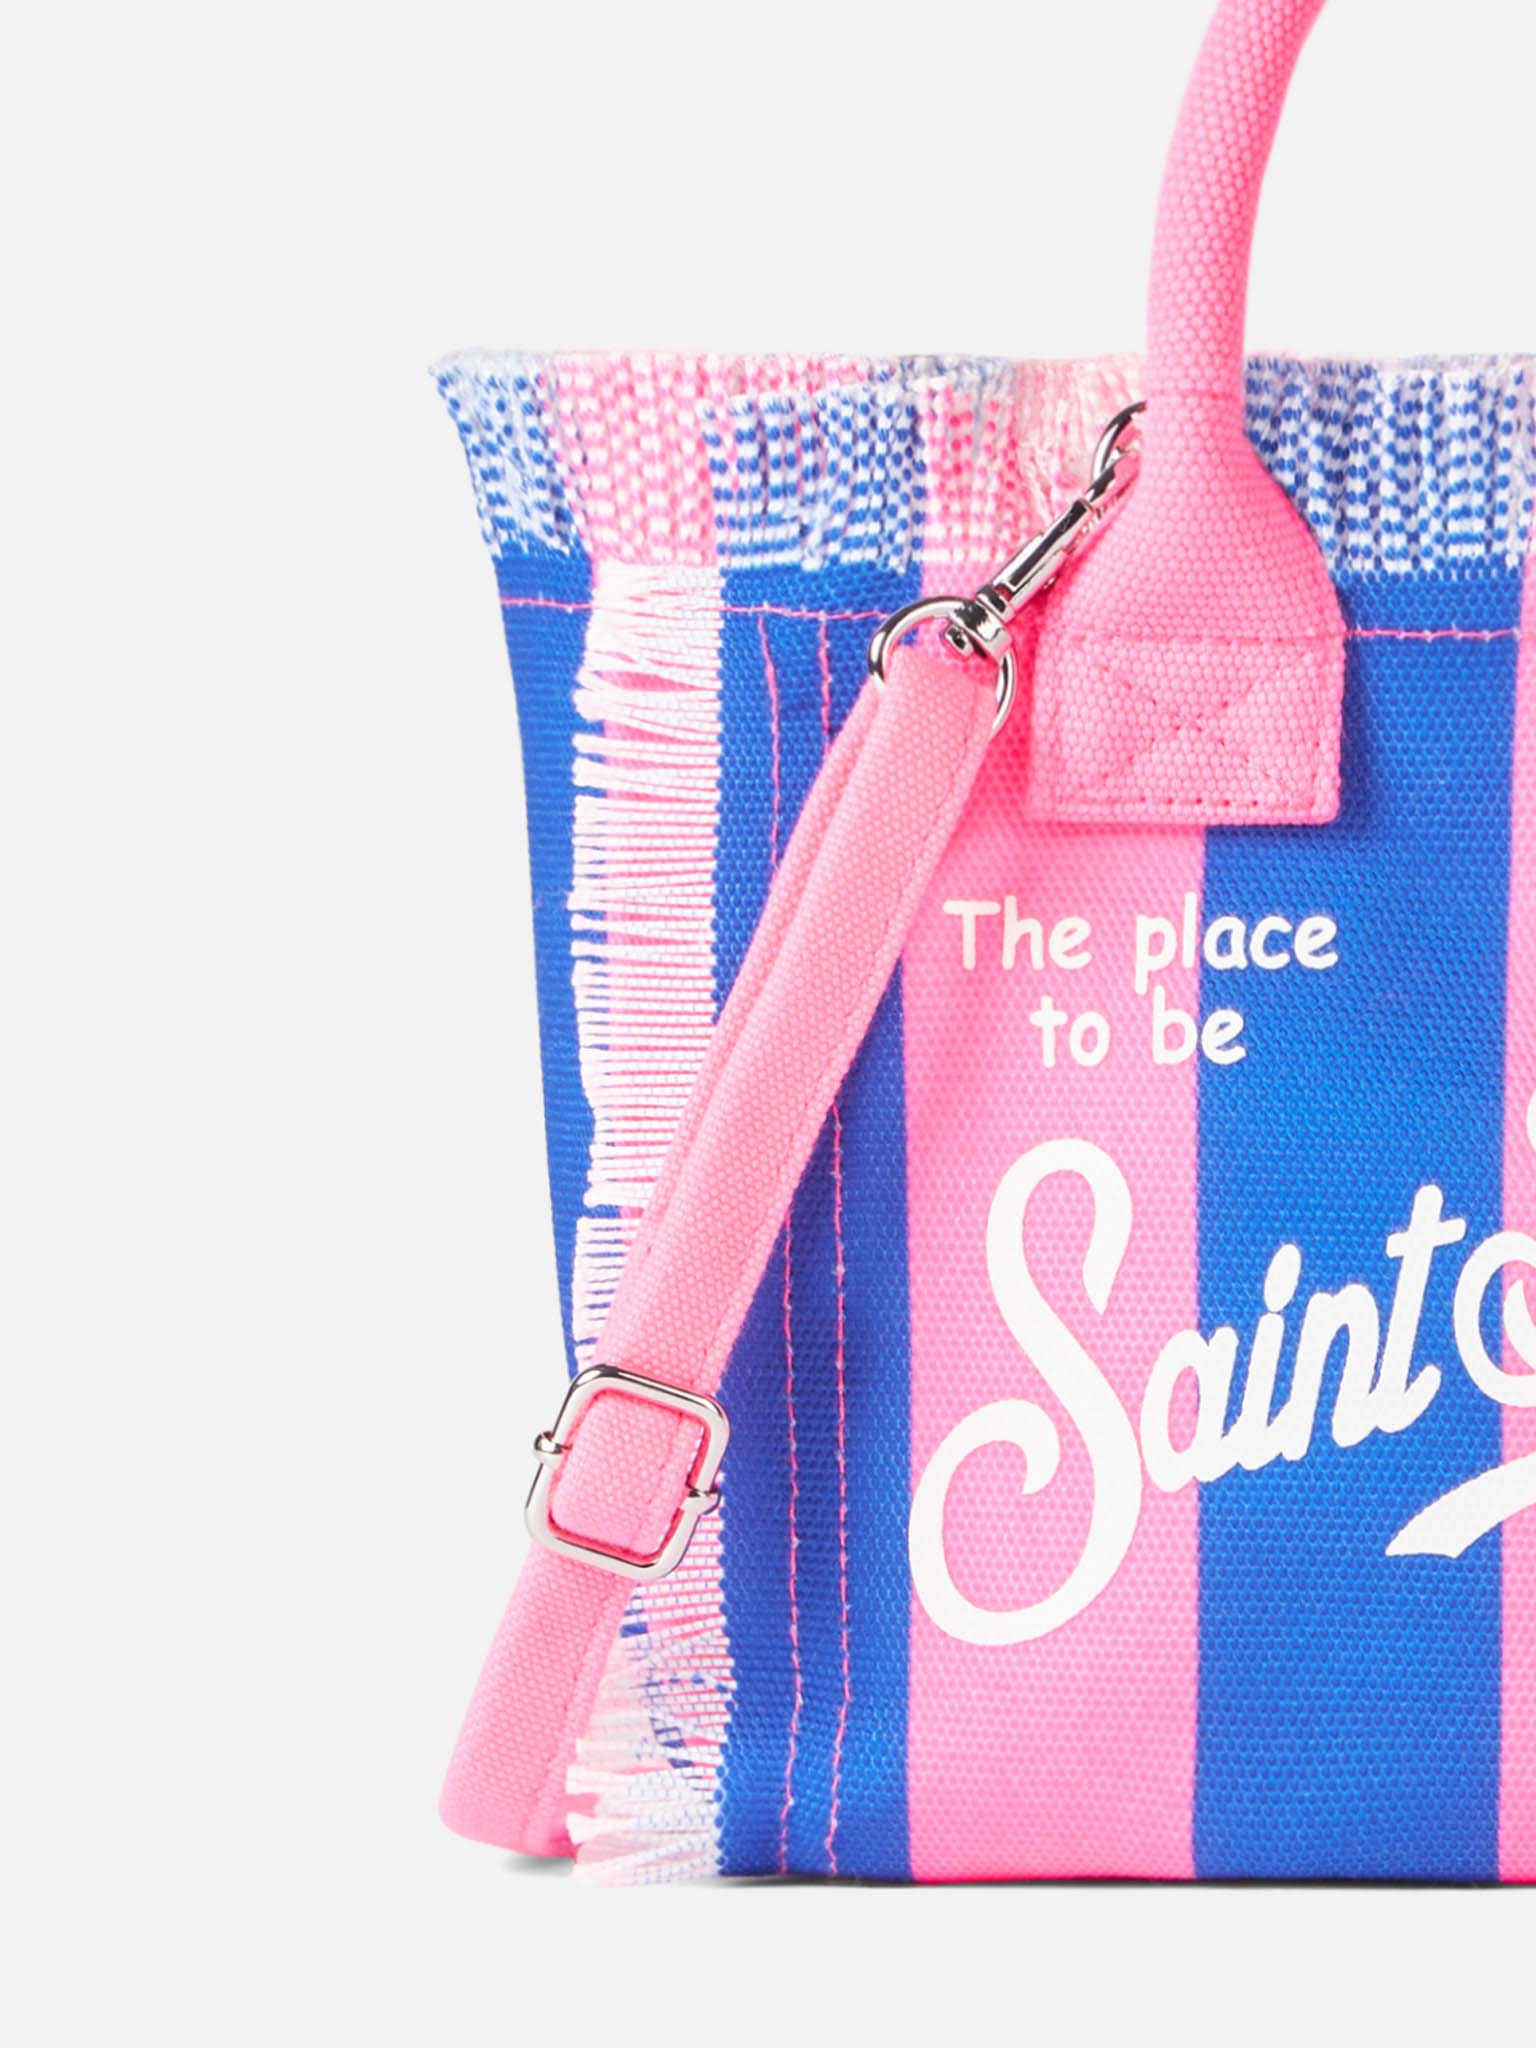 MC2 Saint Barth Vanity woman bag with logo print Pink-Fuchsia